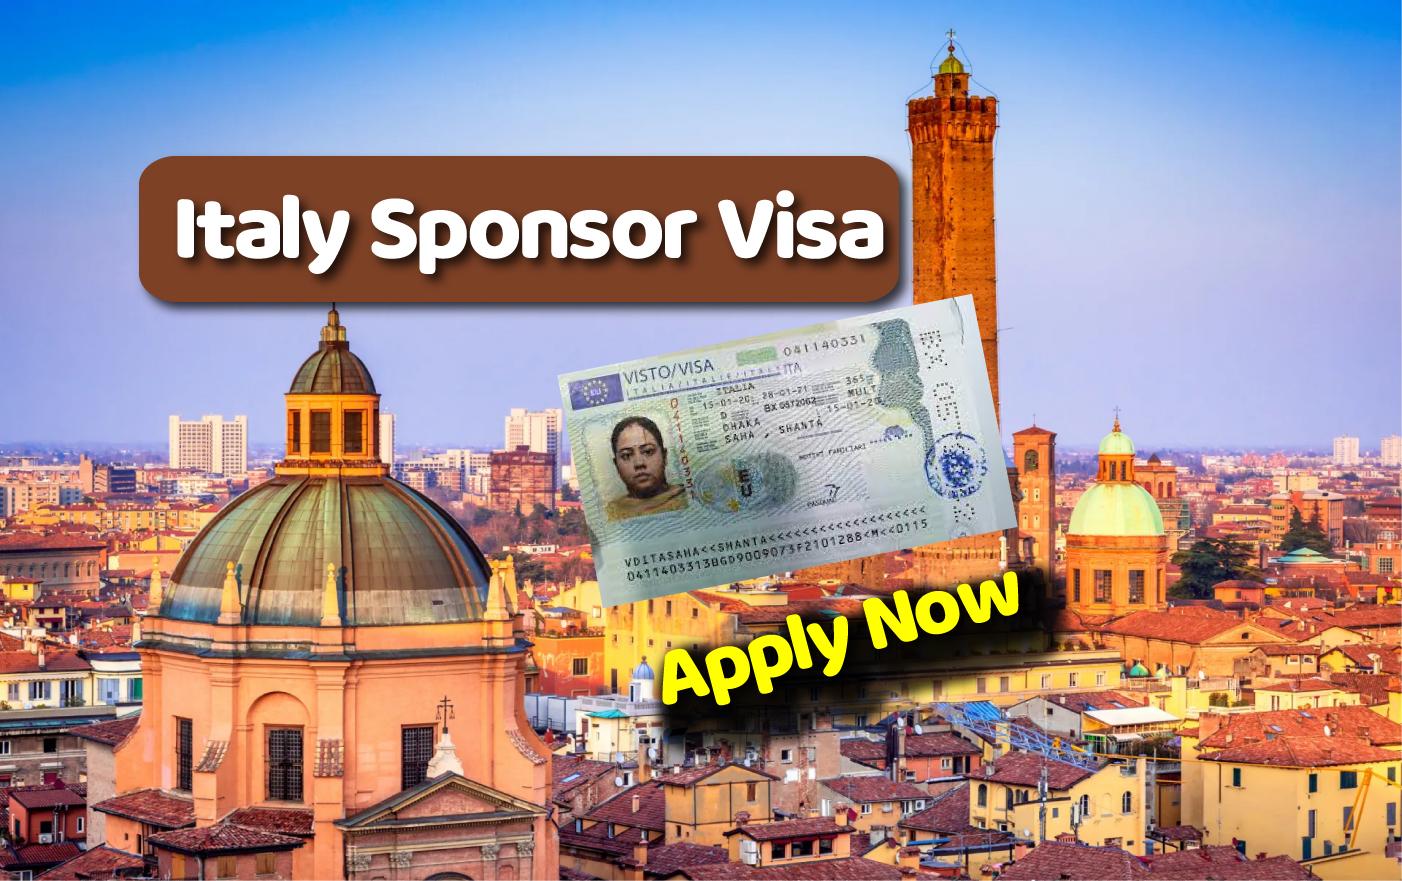 Italy Sponsor Visa